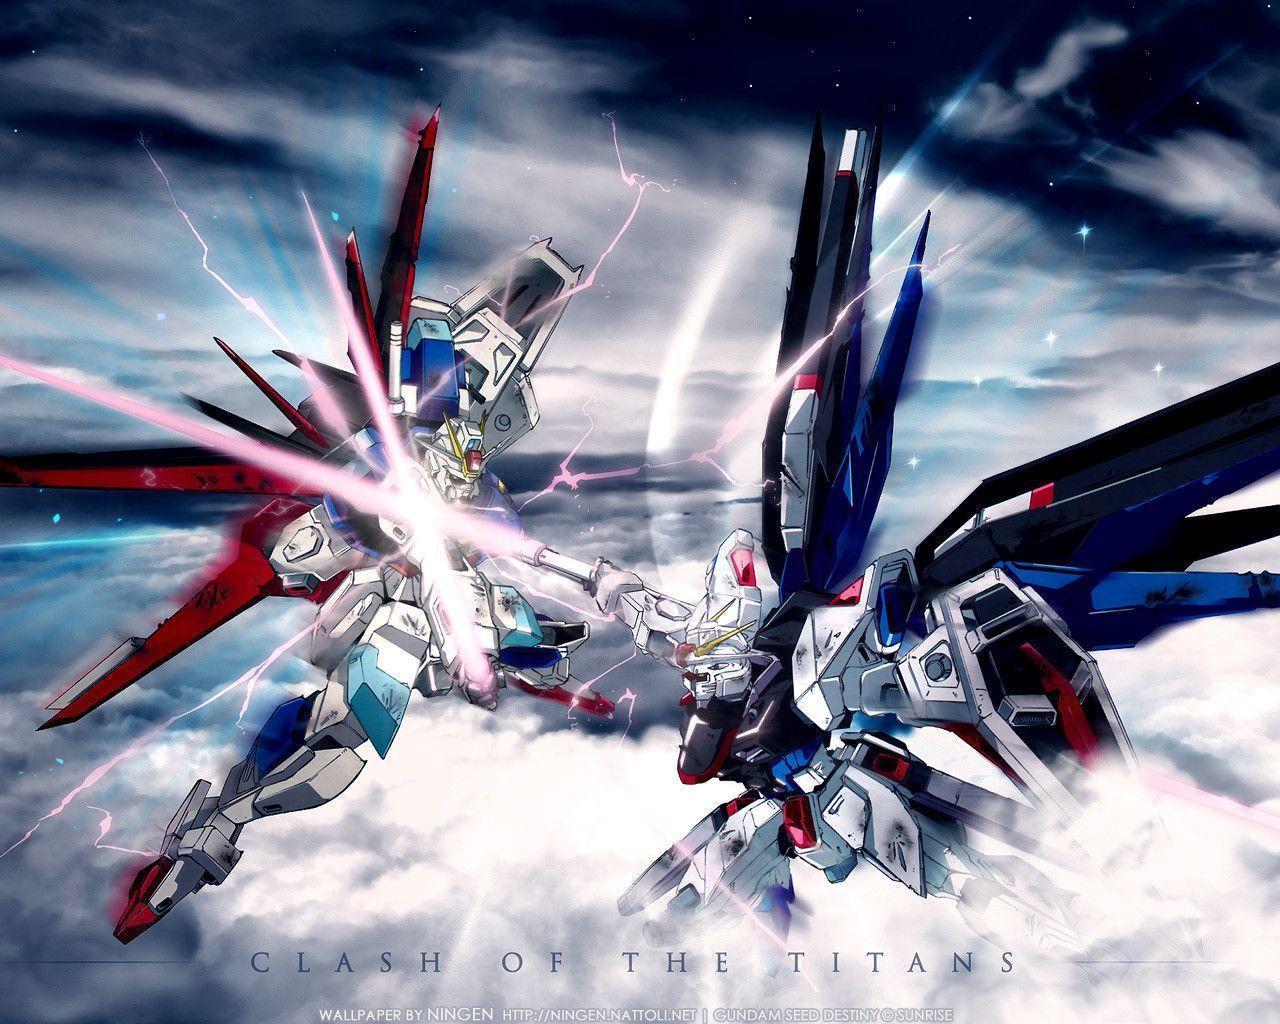 Gundam Seed Freedom Wallpaper